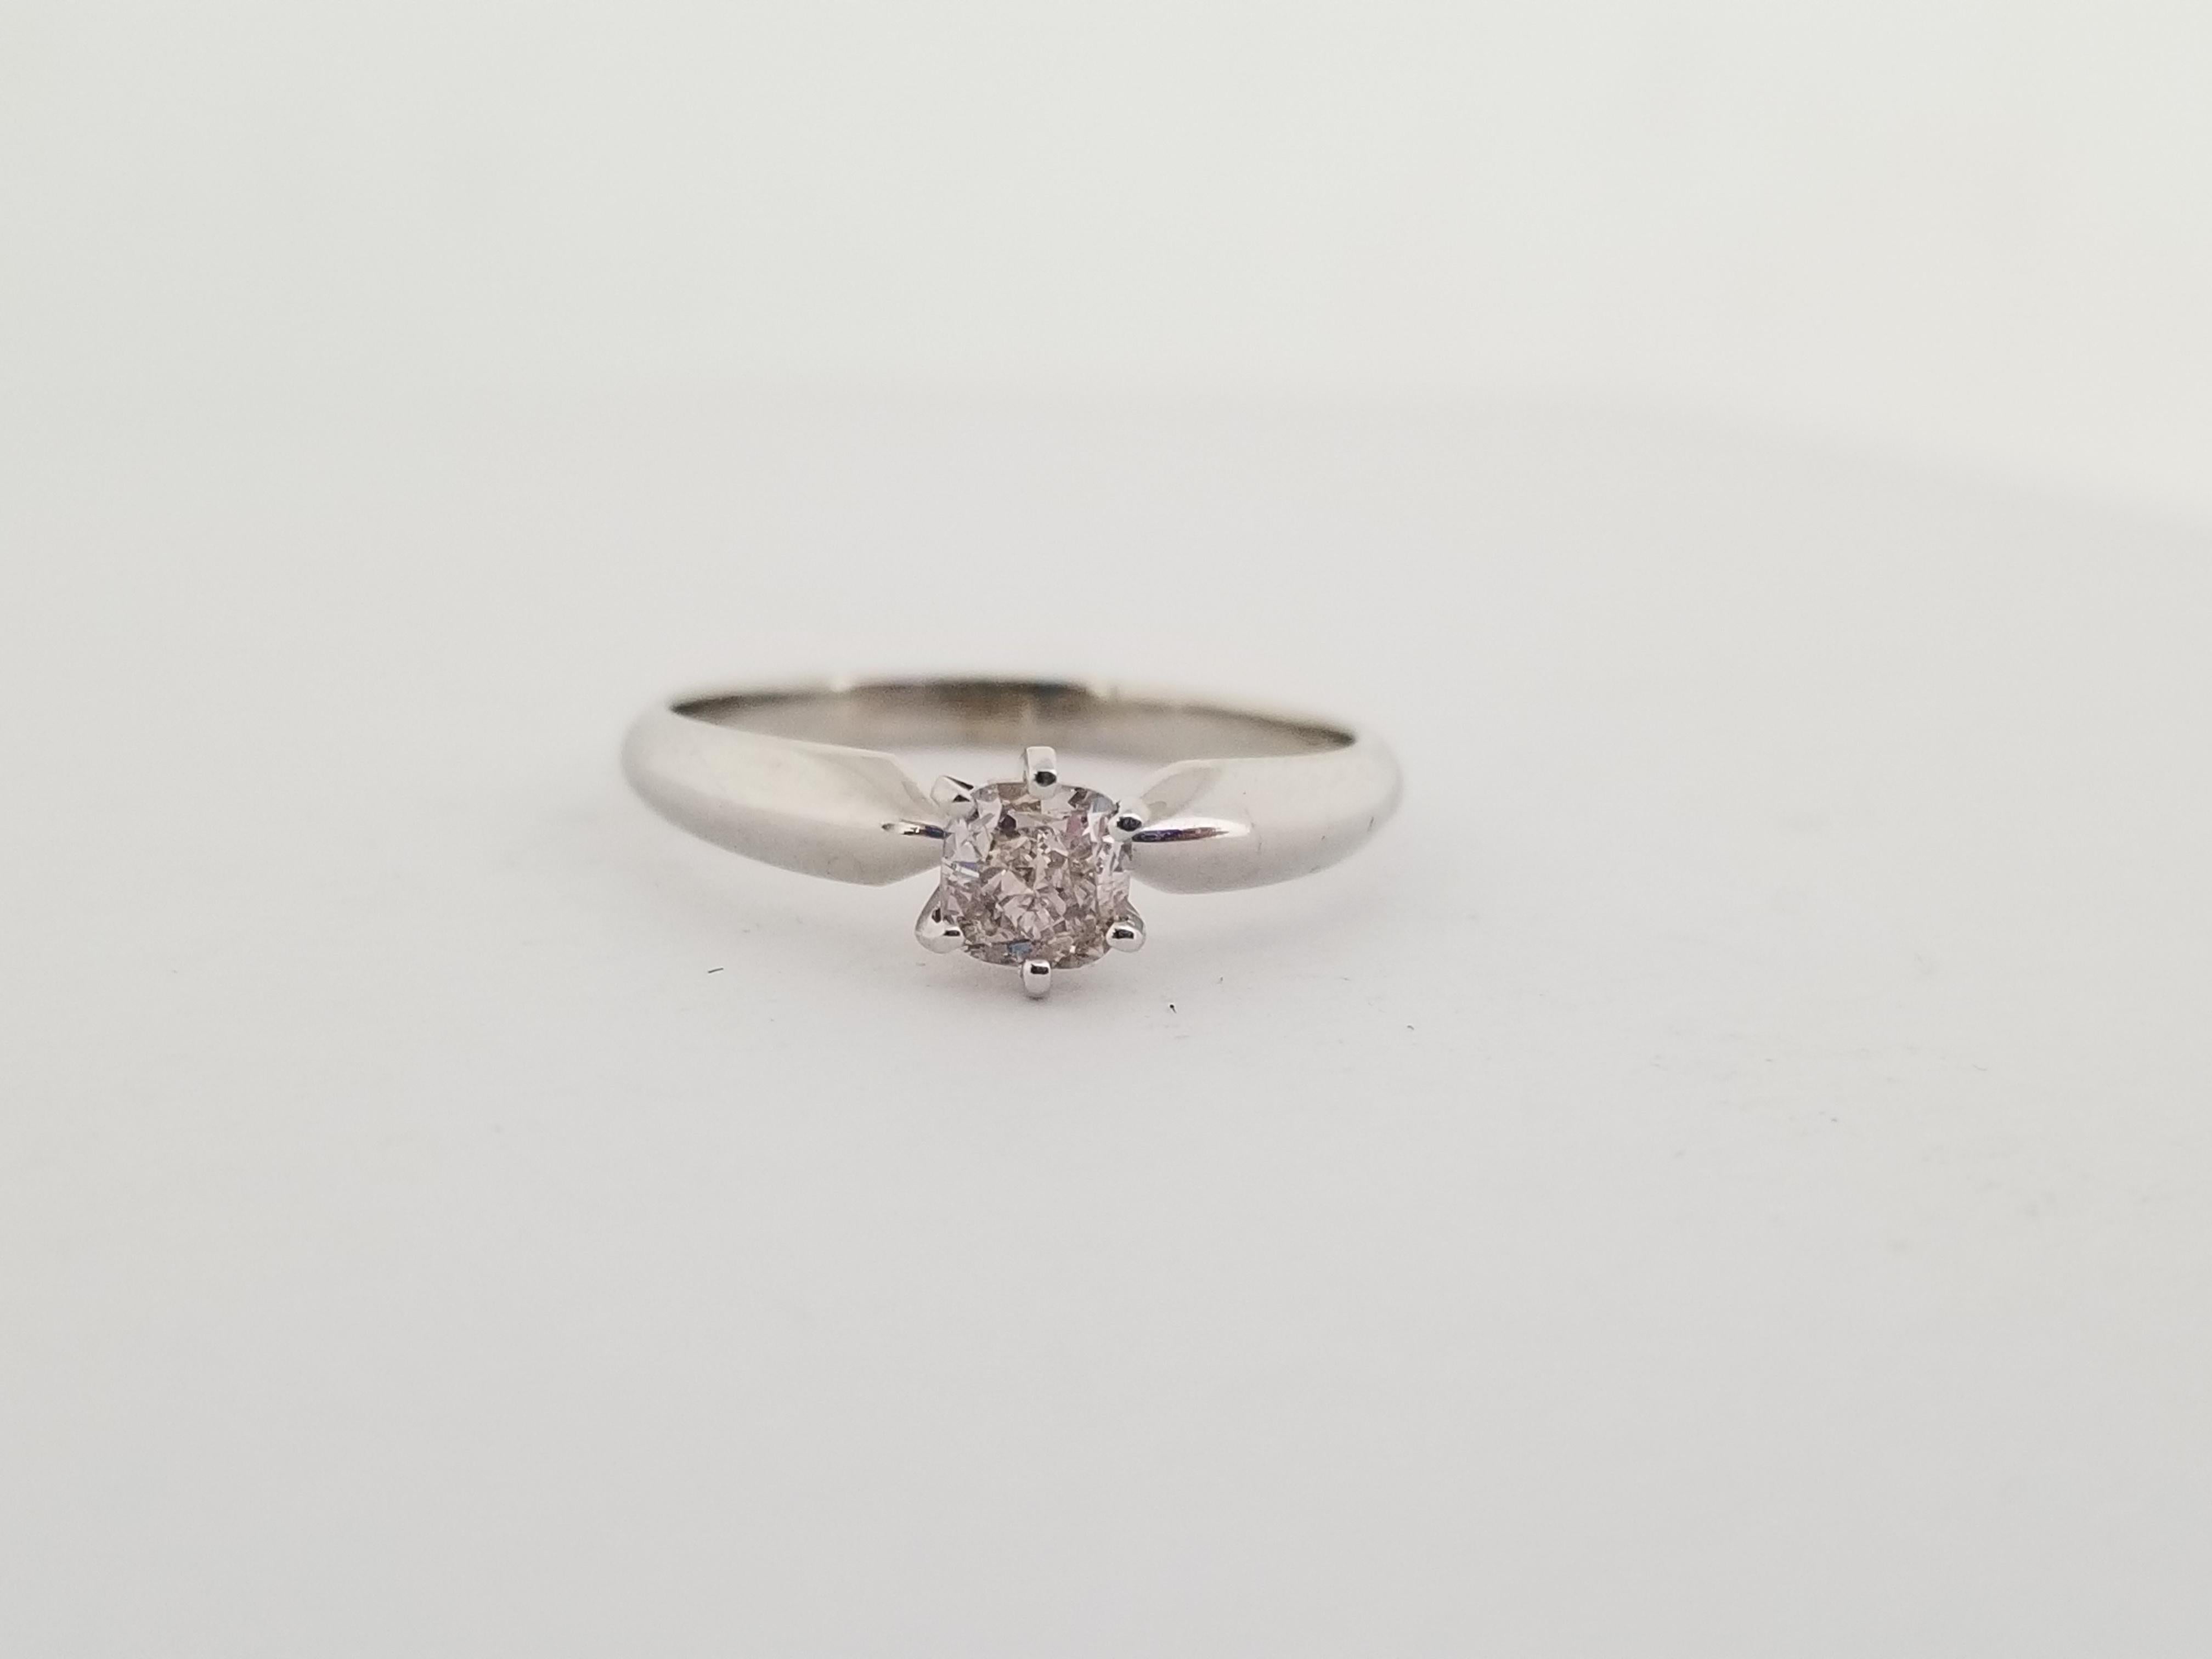 Fancy Pinkish Brown 0.50 Carats Cushion natural diamond set on a 6 prong white gold 14 Karat Ring. Sparkling, Shiny. 
Ring Size 7.25